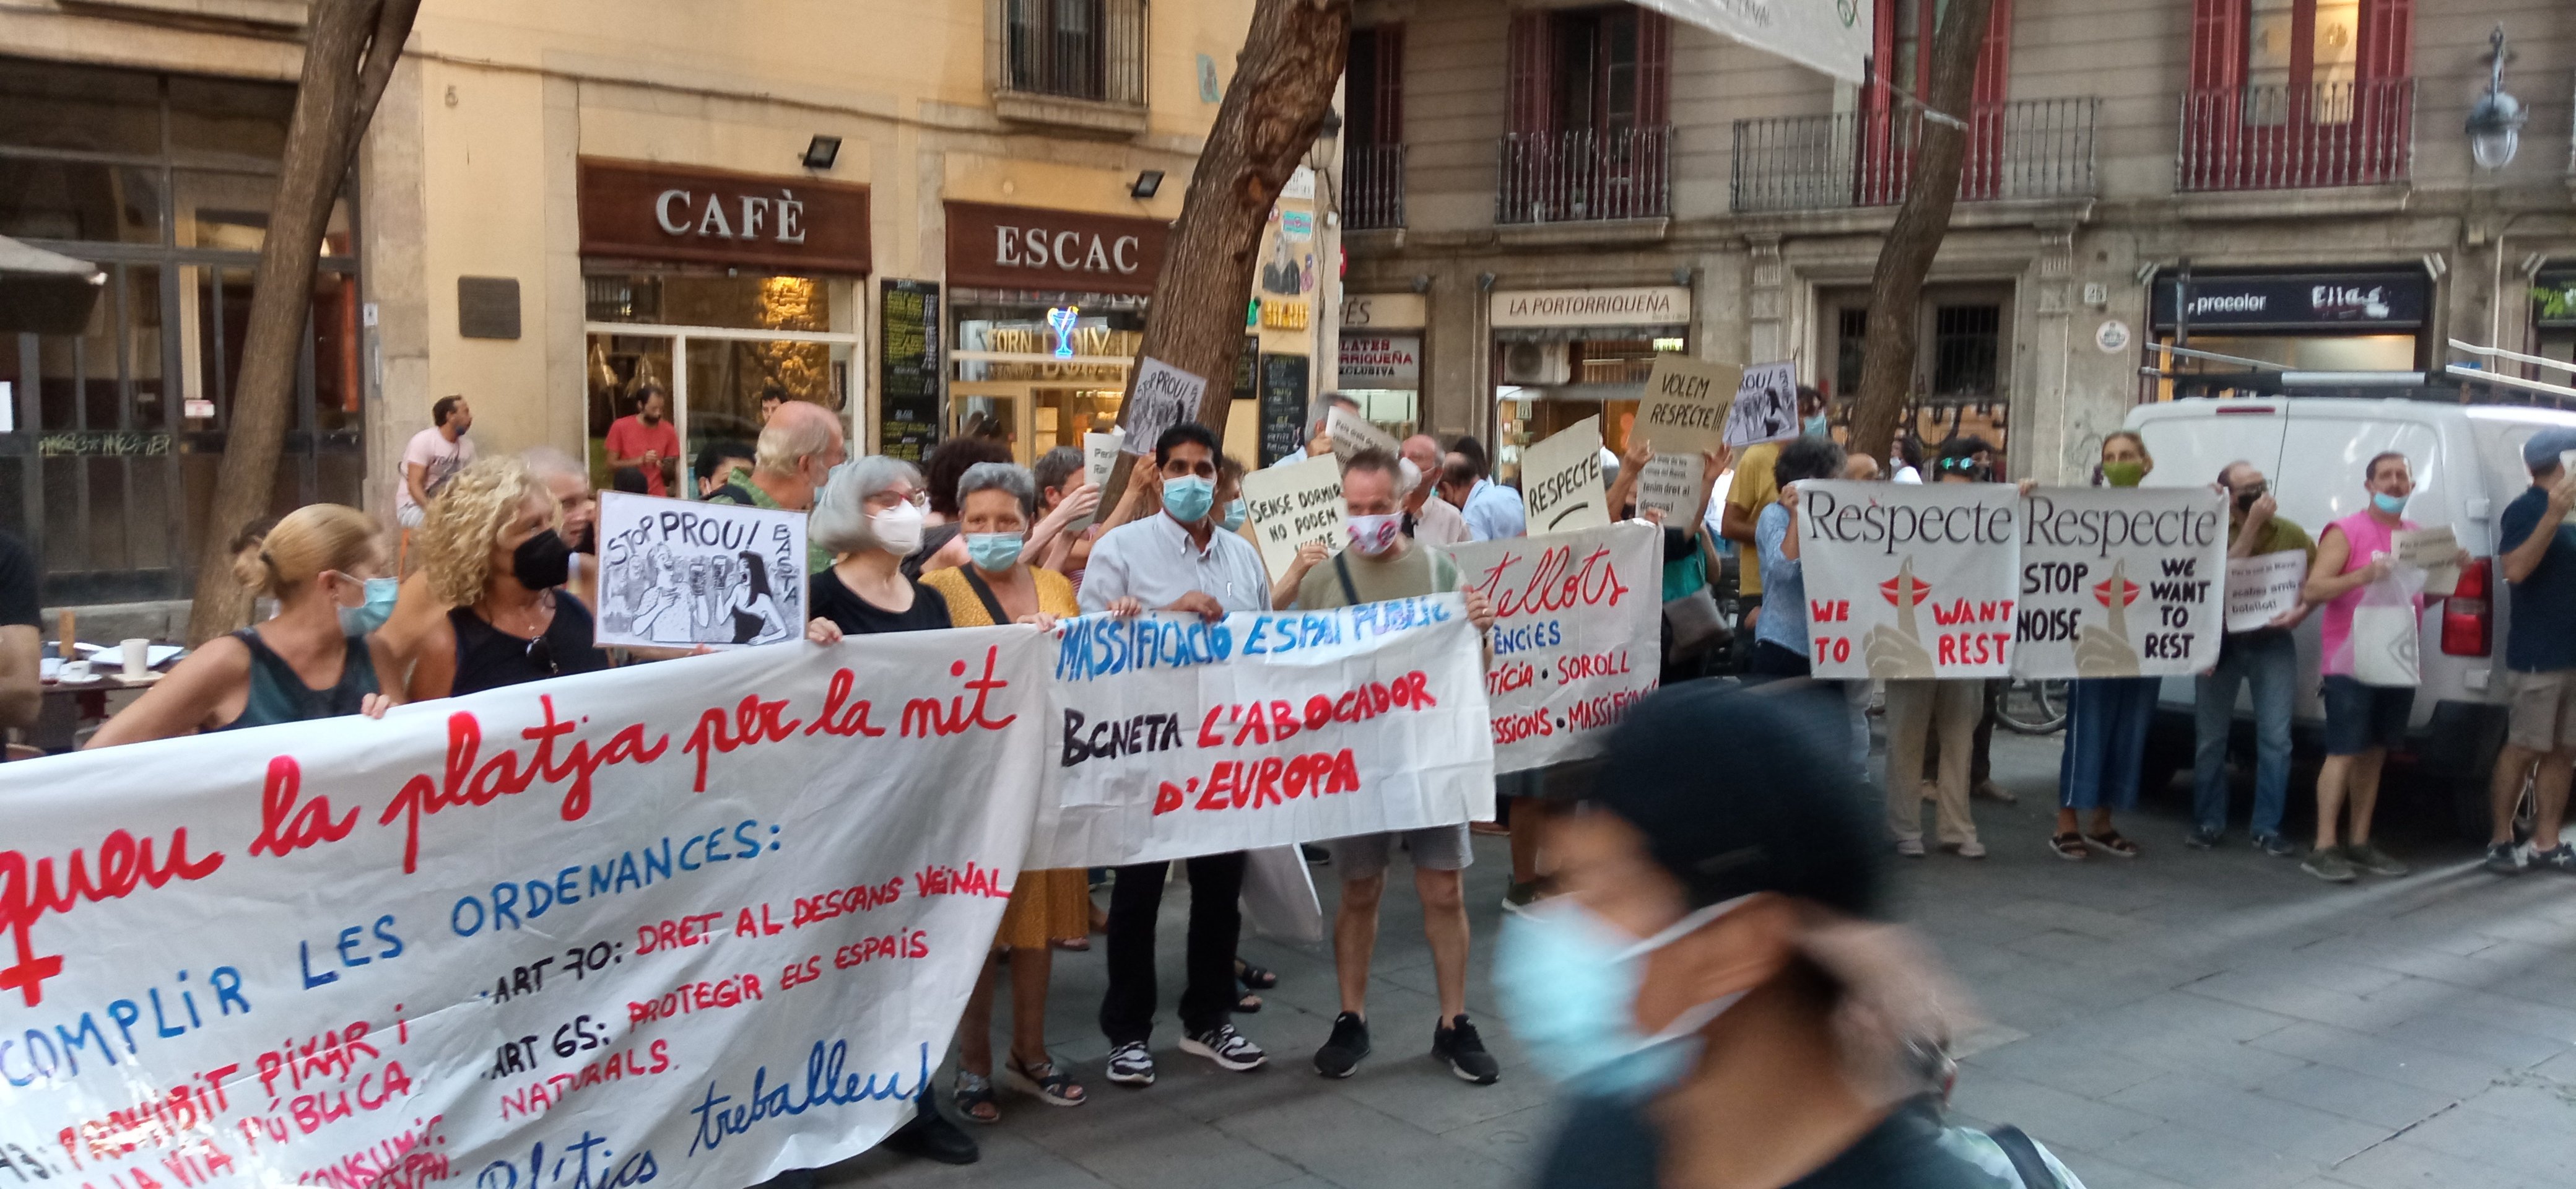 Clam antibotelló a Ciutat Vella: “Prou soroll”